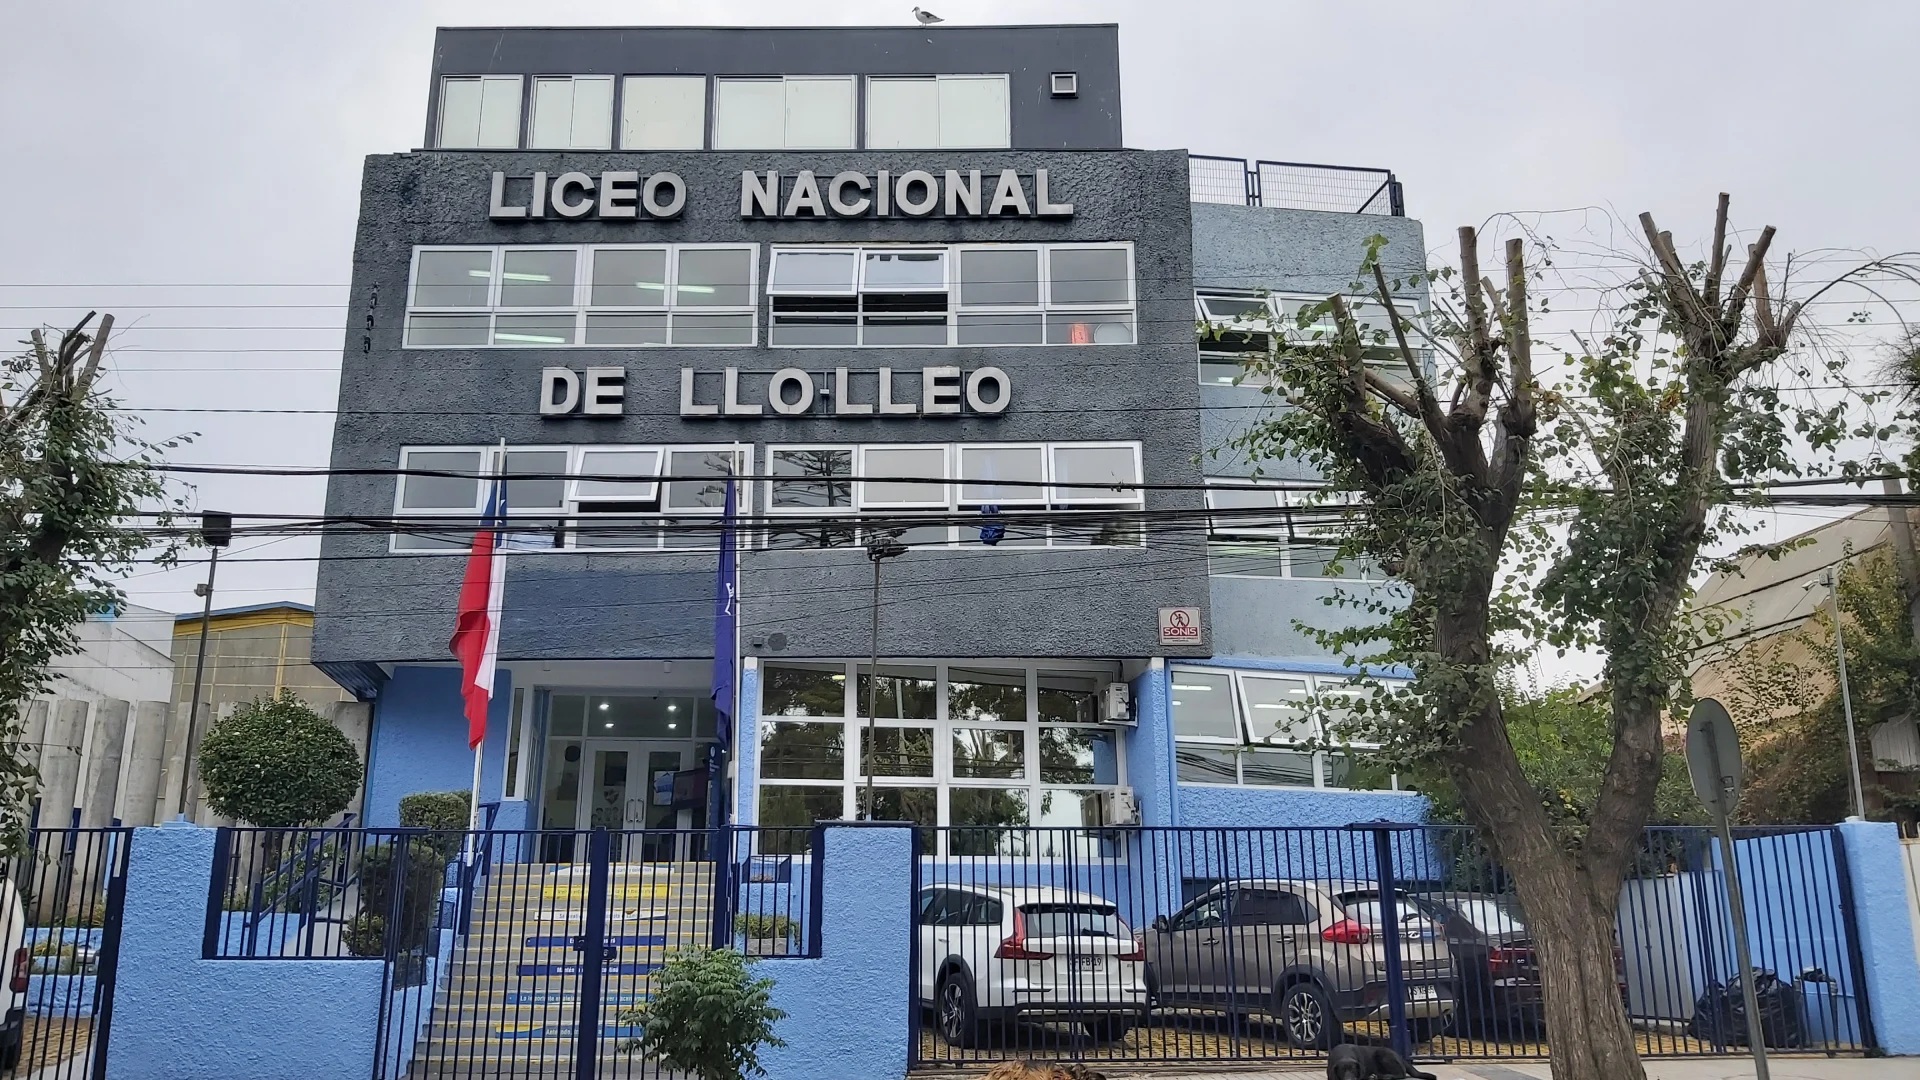 Liceo LLolleo